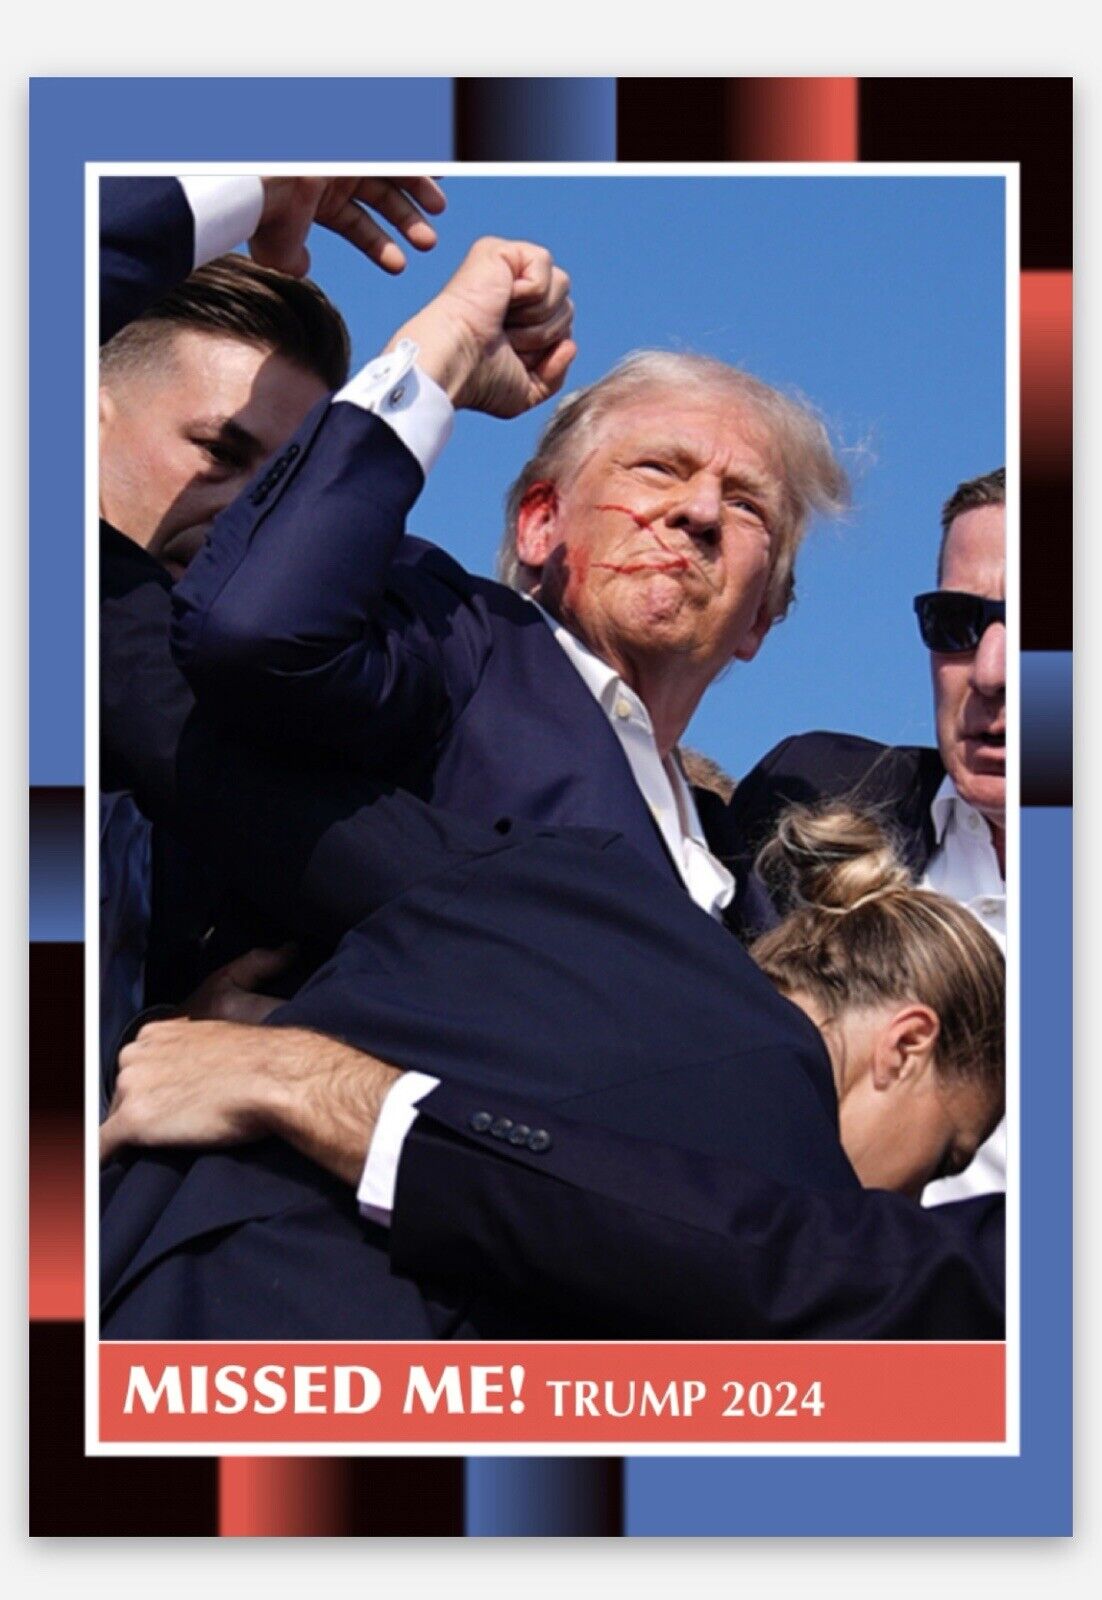 Donald Trump The Shot Missed Custom trading card MAGA USA #45 #47 Biden Fired